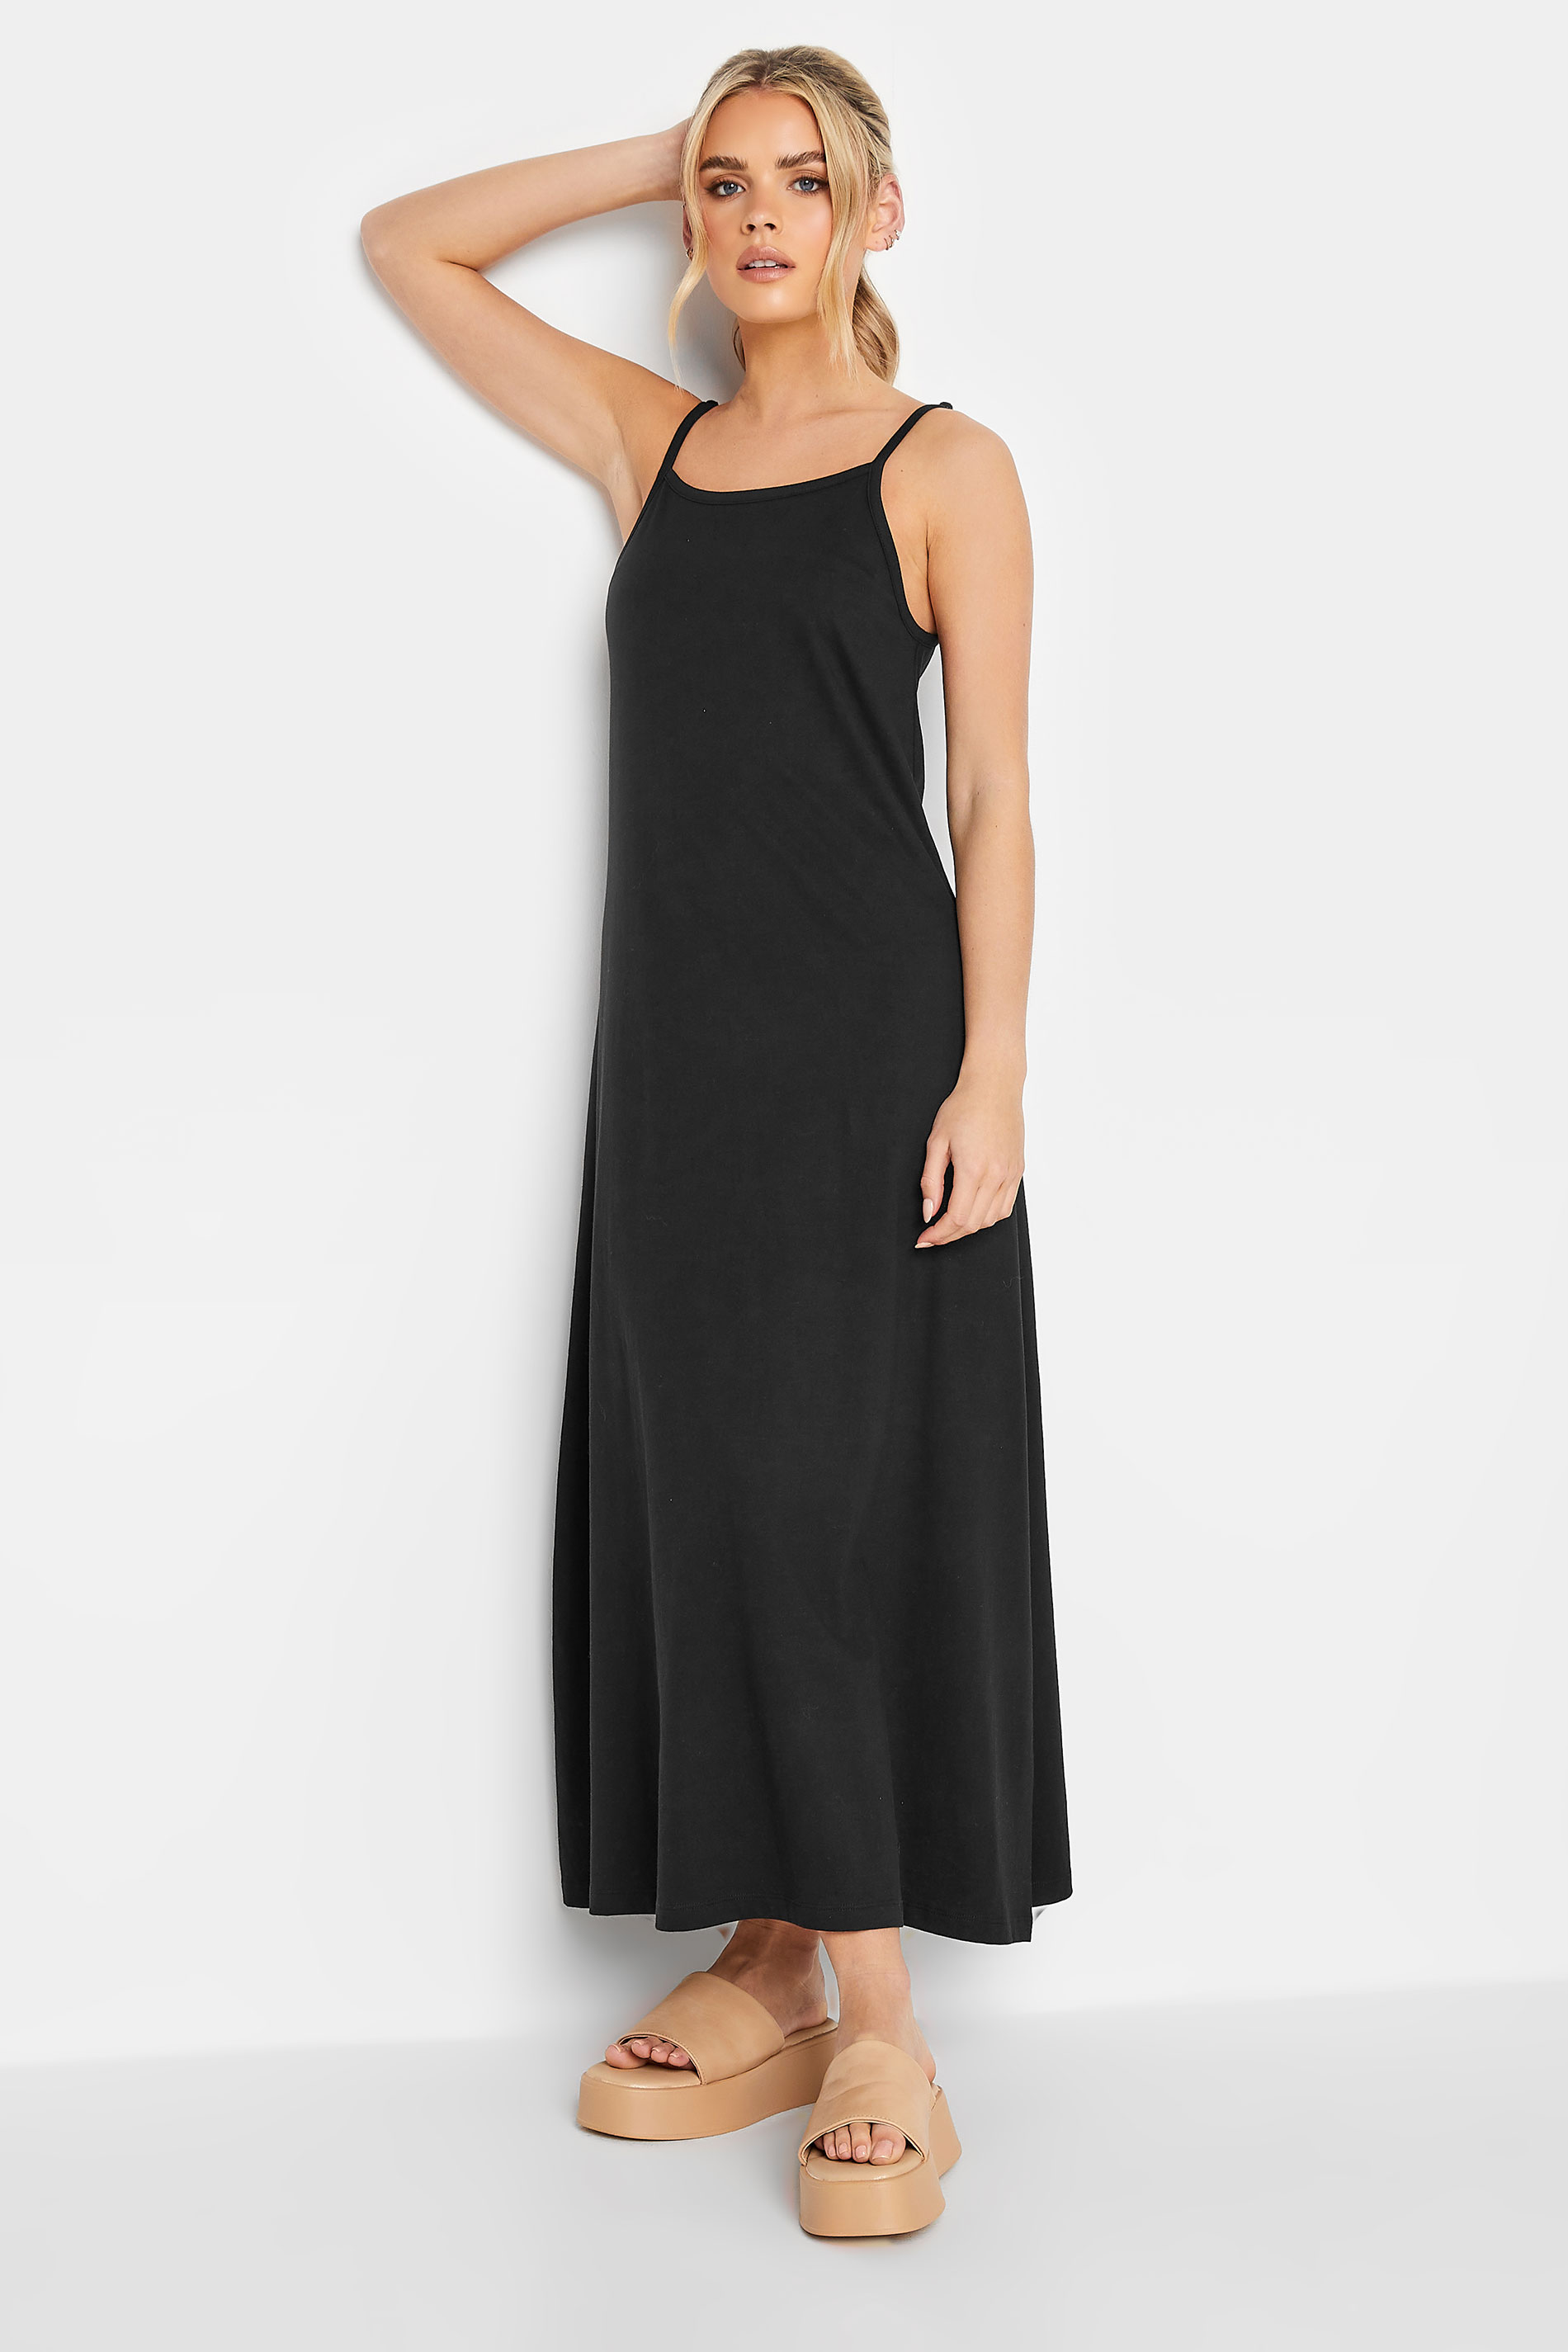 PixieGirl Black Strappy Maxi Slip Dress | PixieGirl 1